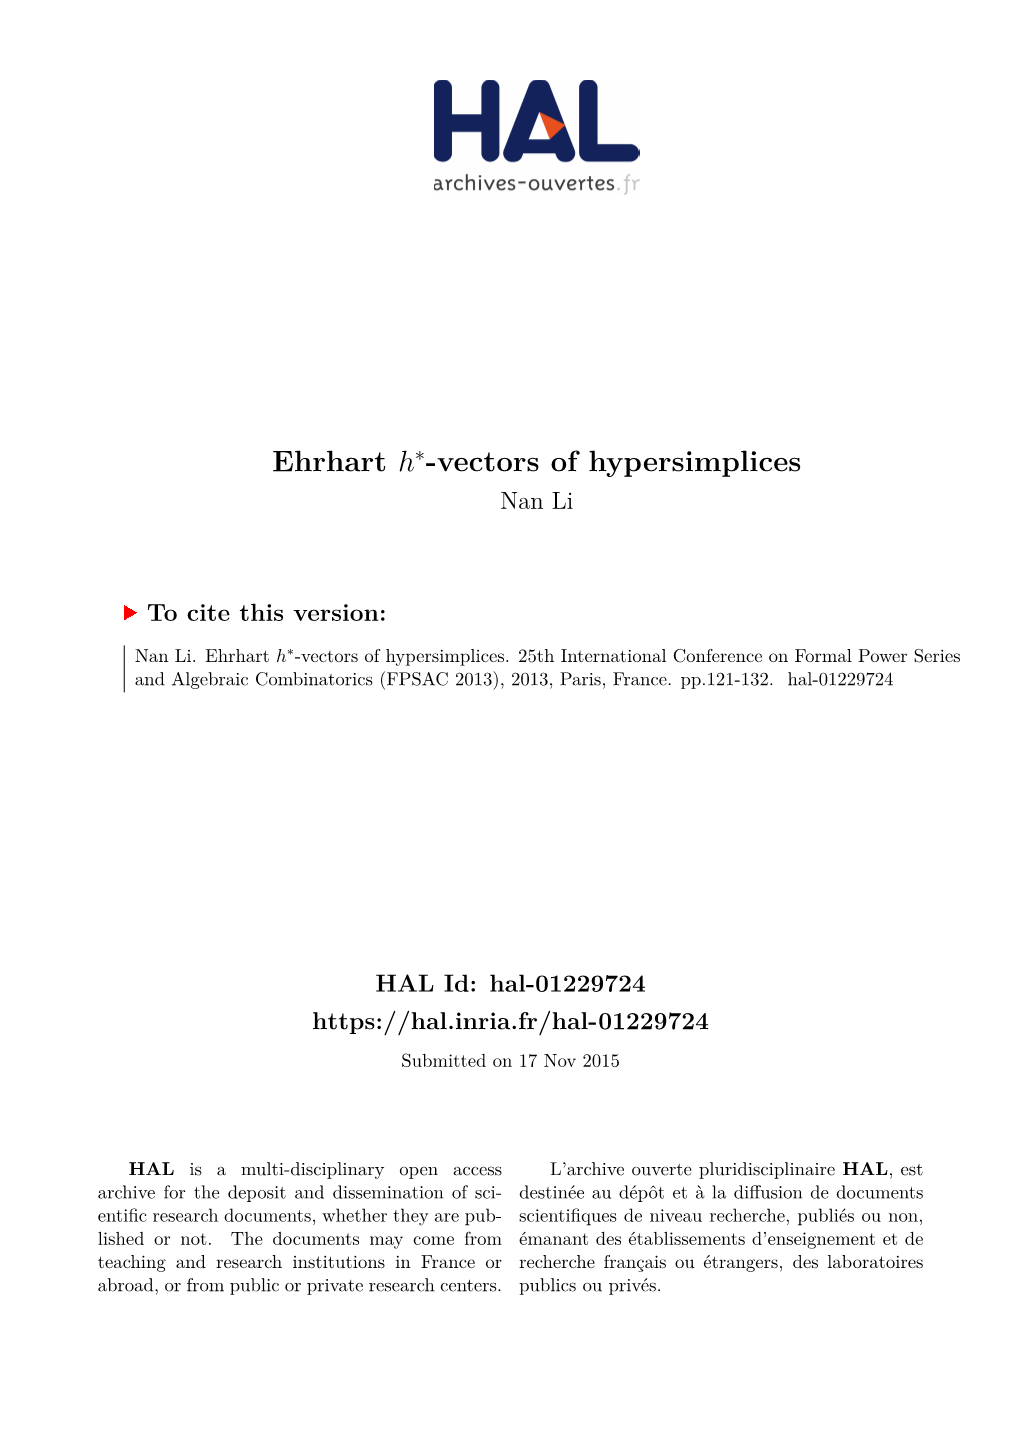 Ehrhart H*-Vectors of Hypersimplices, Discrete and Computational Geometry 38 No